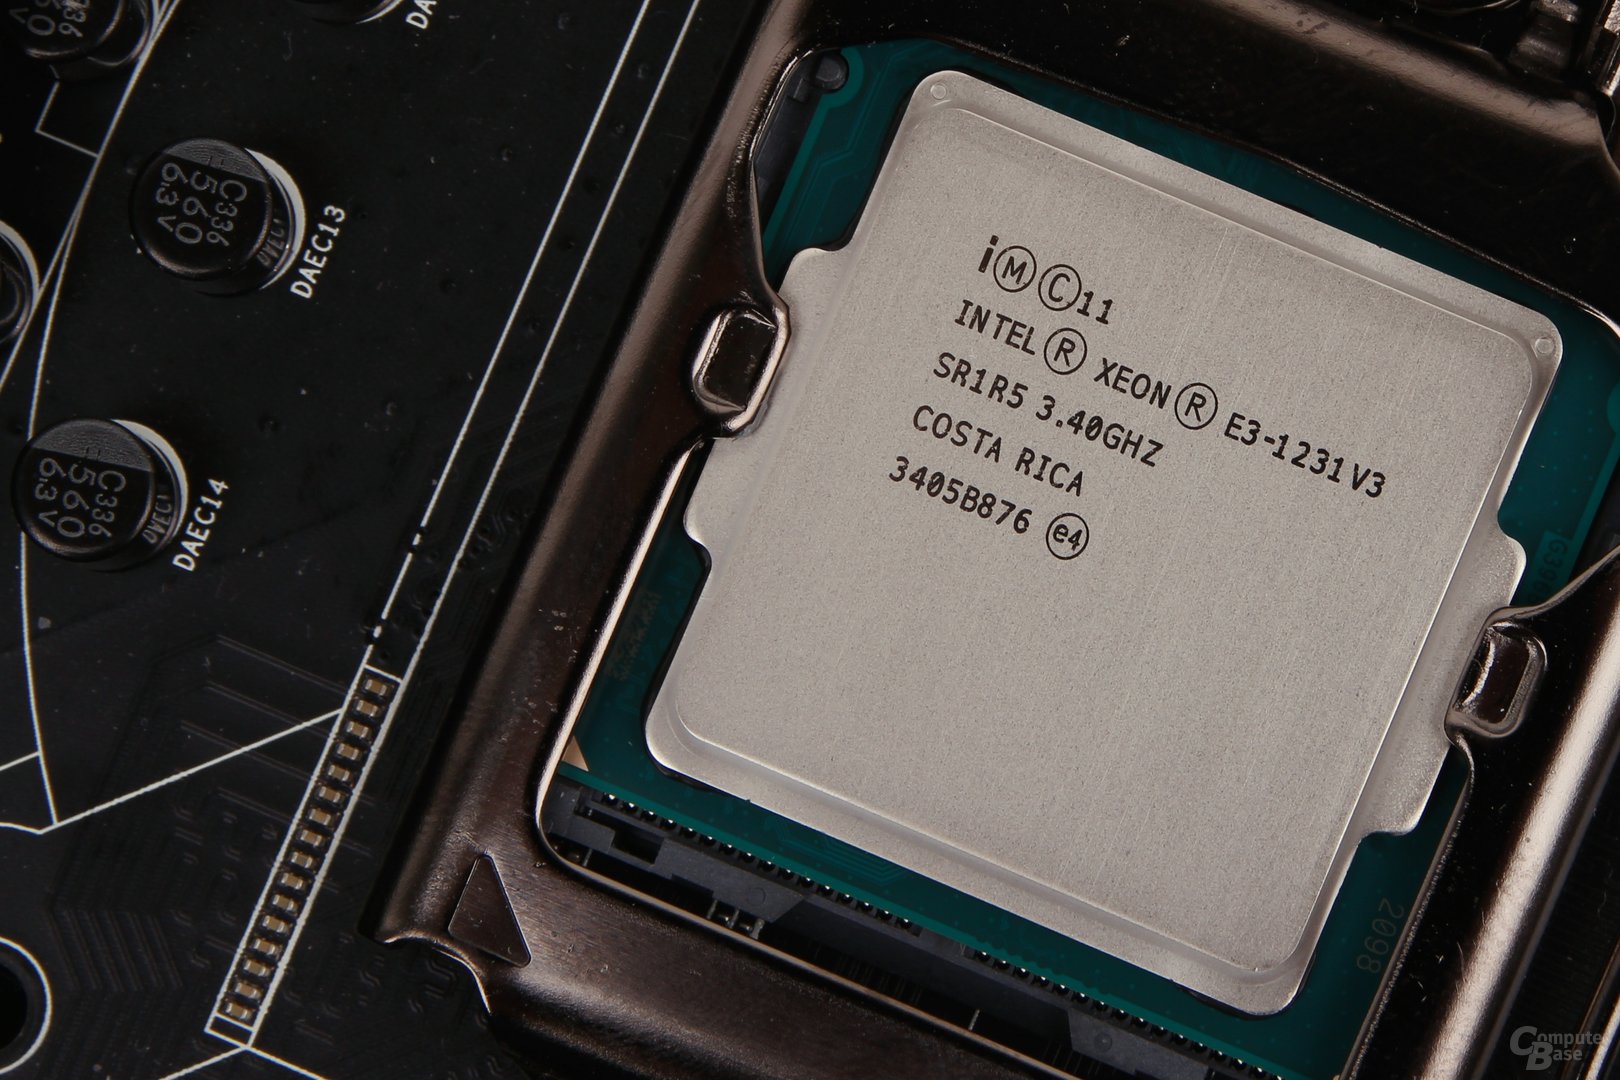 Intel Xeon E3 1231 v3